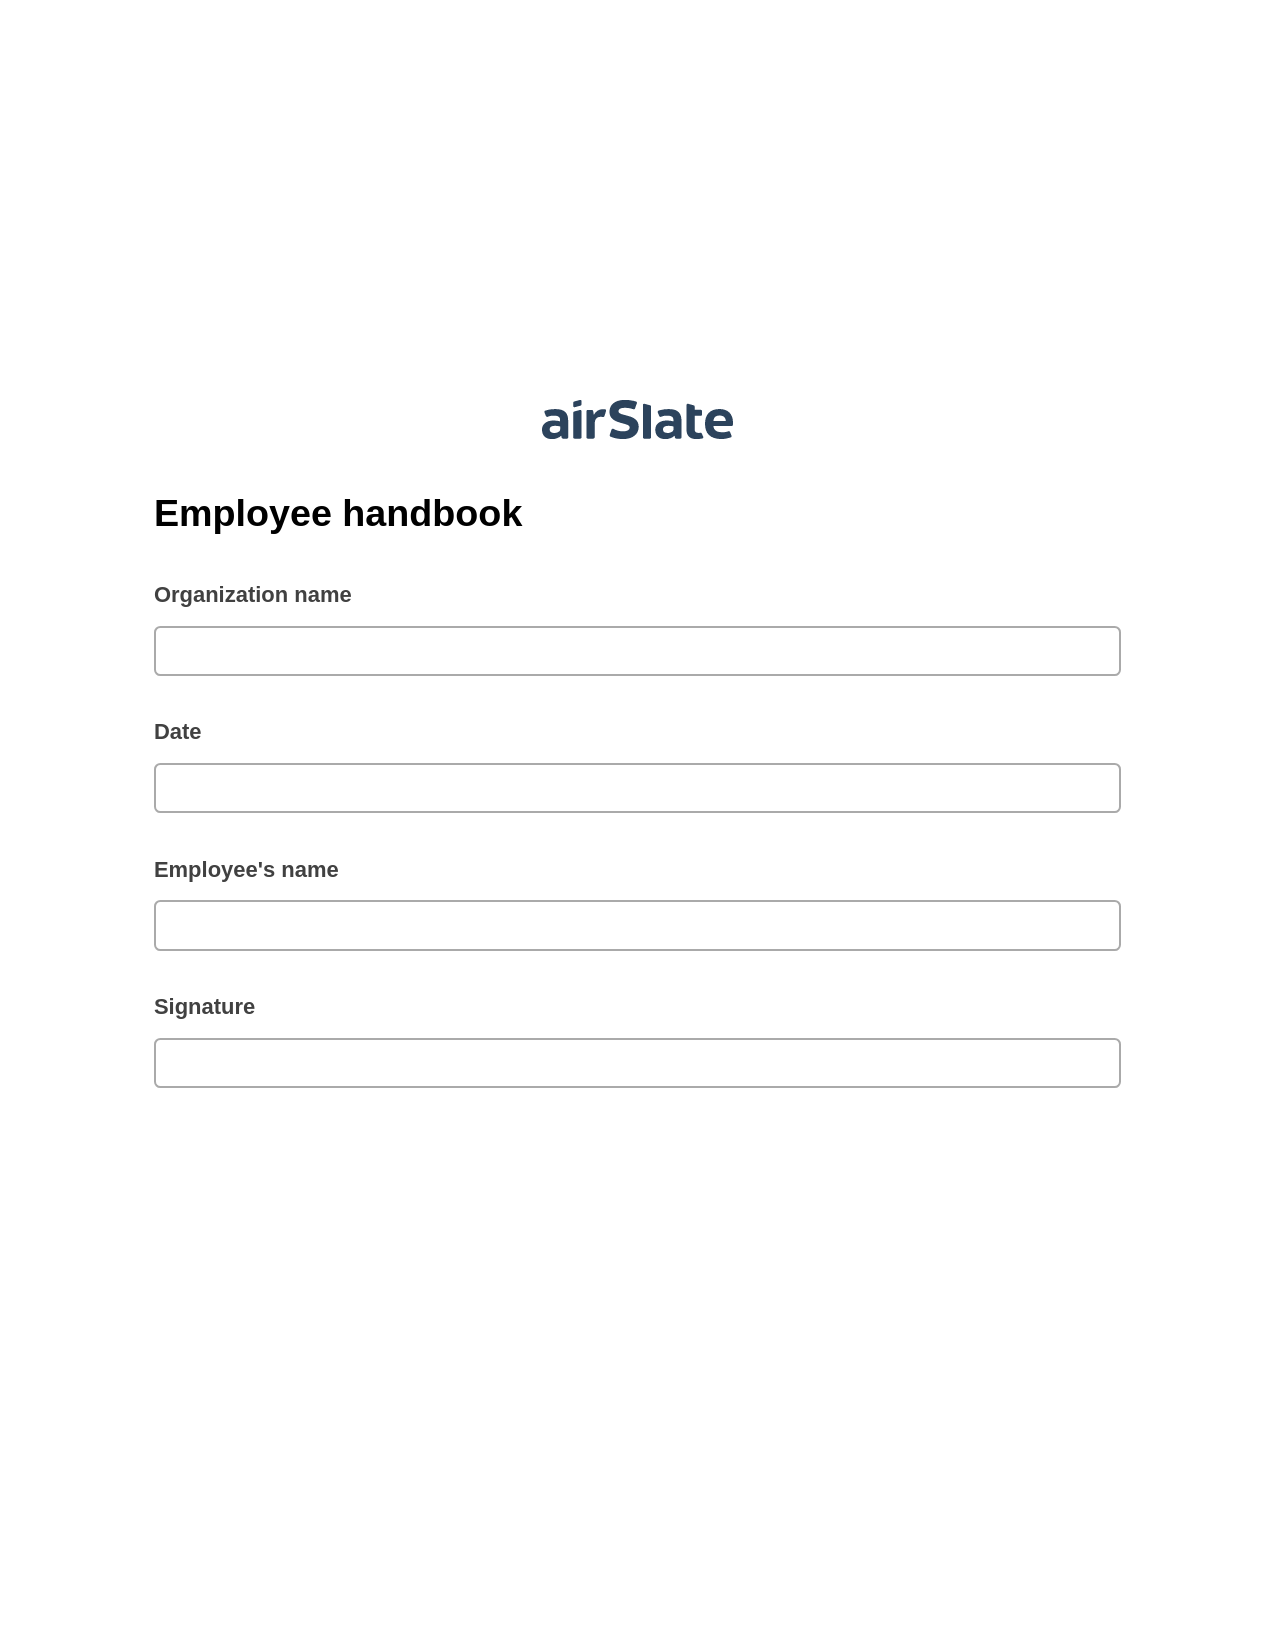 Multirole Employee handbook Pre-fill from Smartsheet Bot, Reminder Bot, Export to Excel 365 Bot